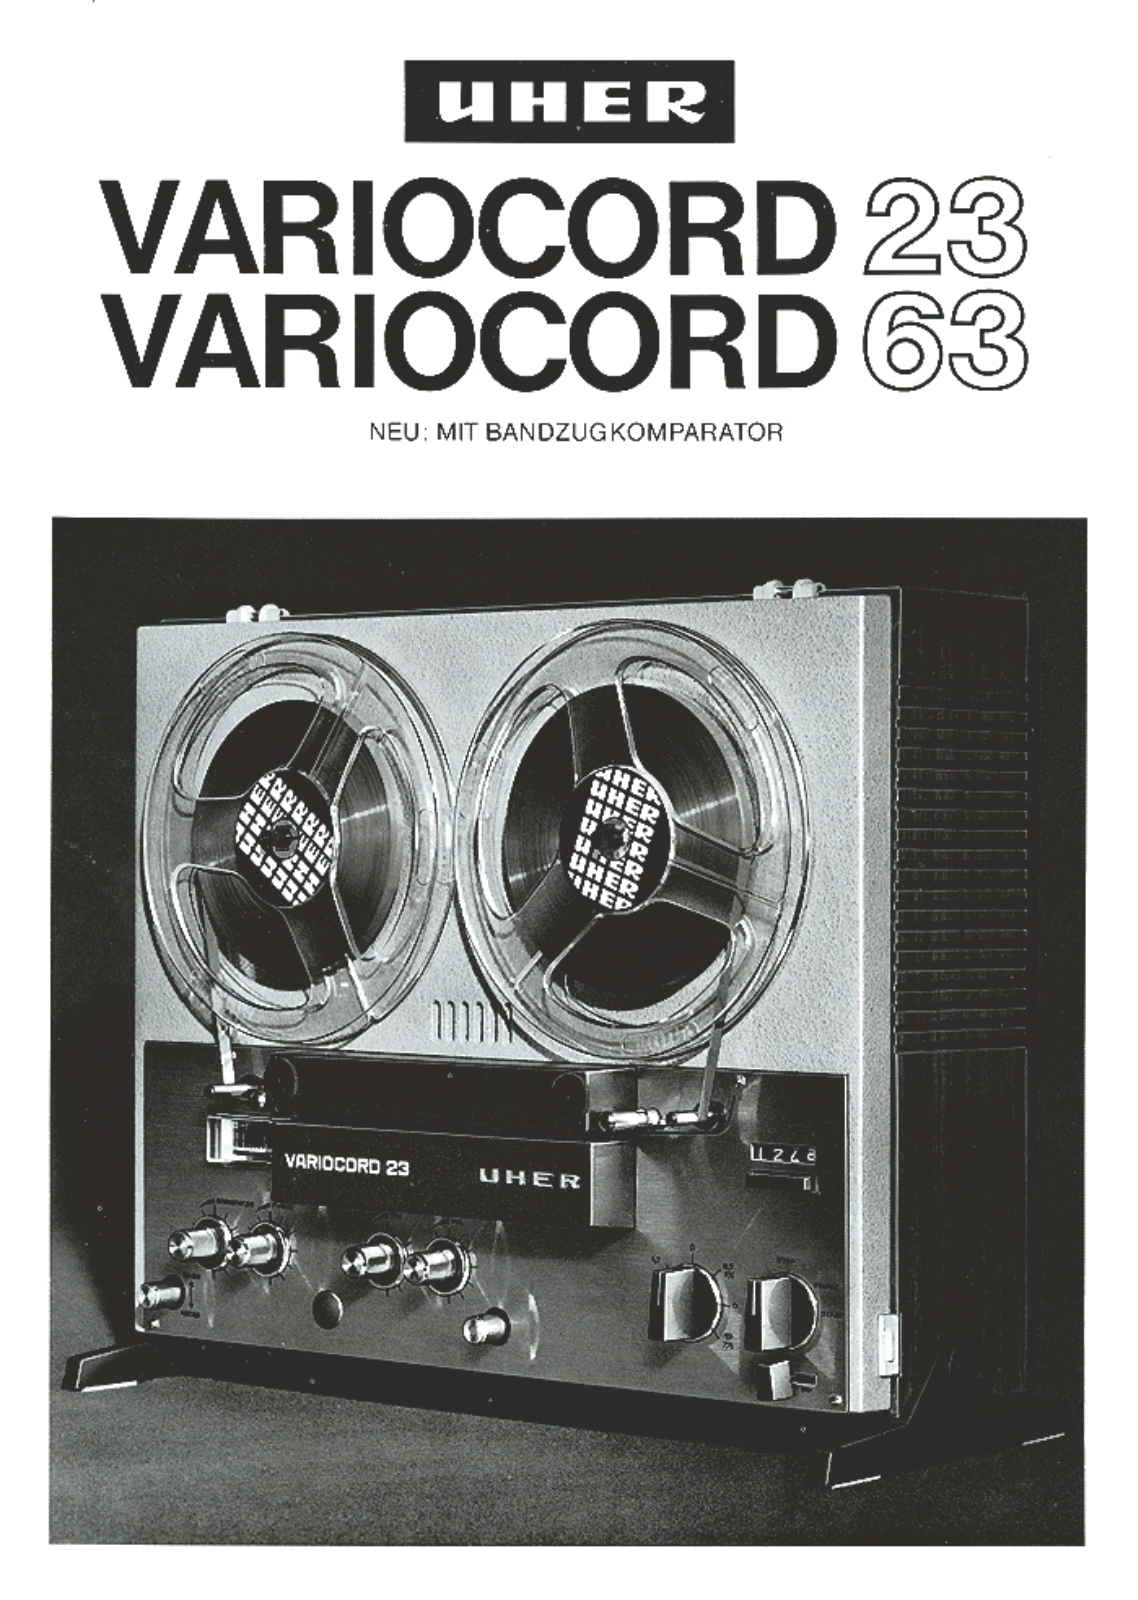 Uher Variocord 23, Variocord 63 Brochure